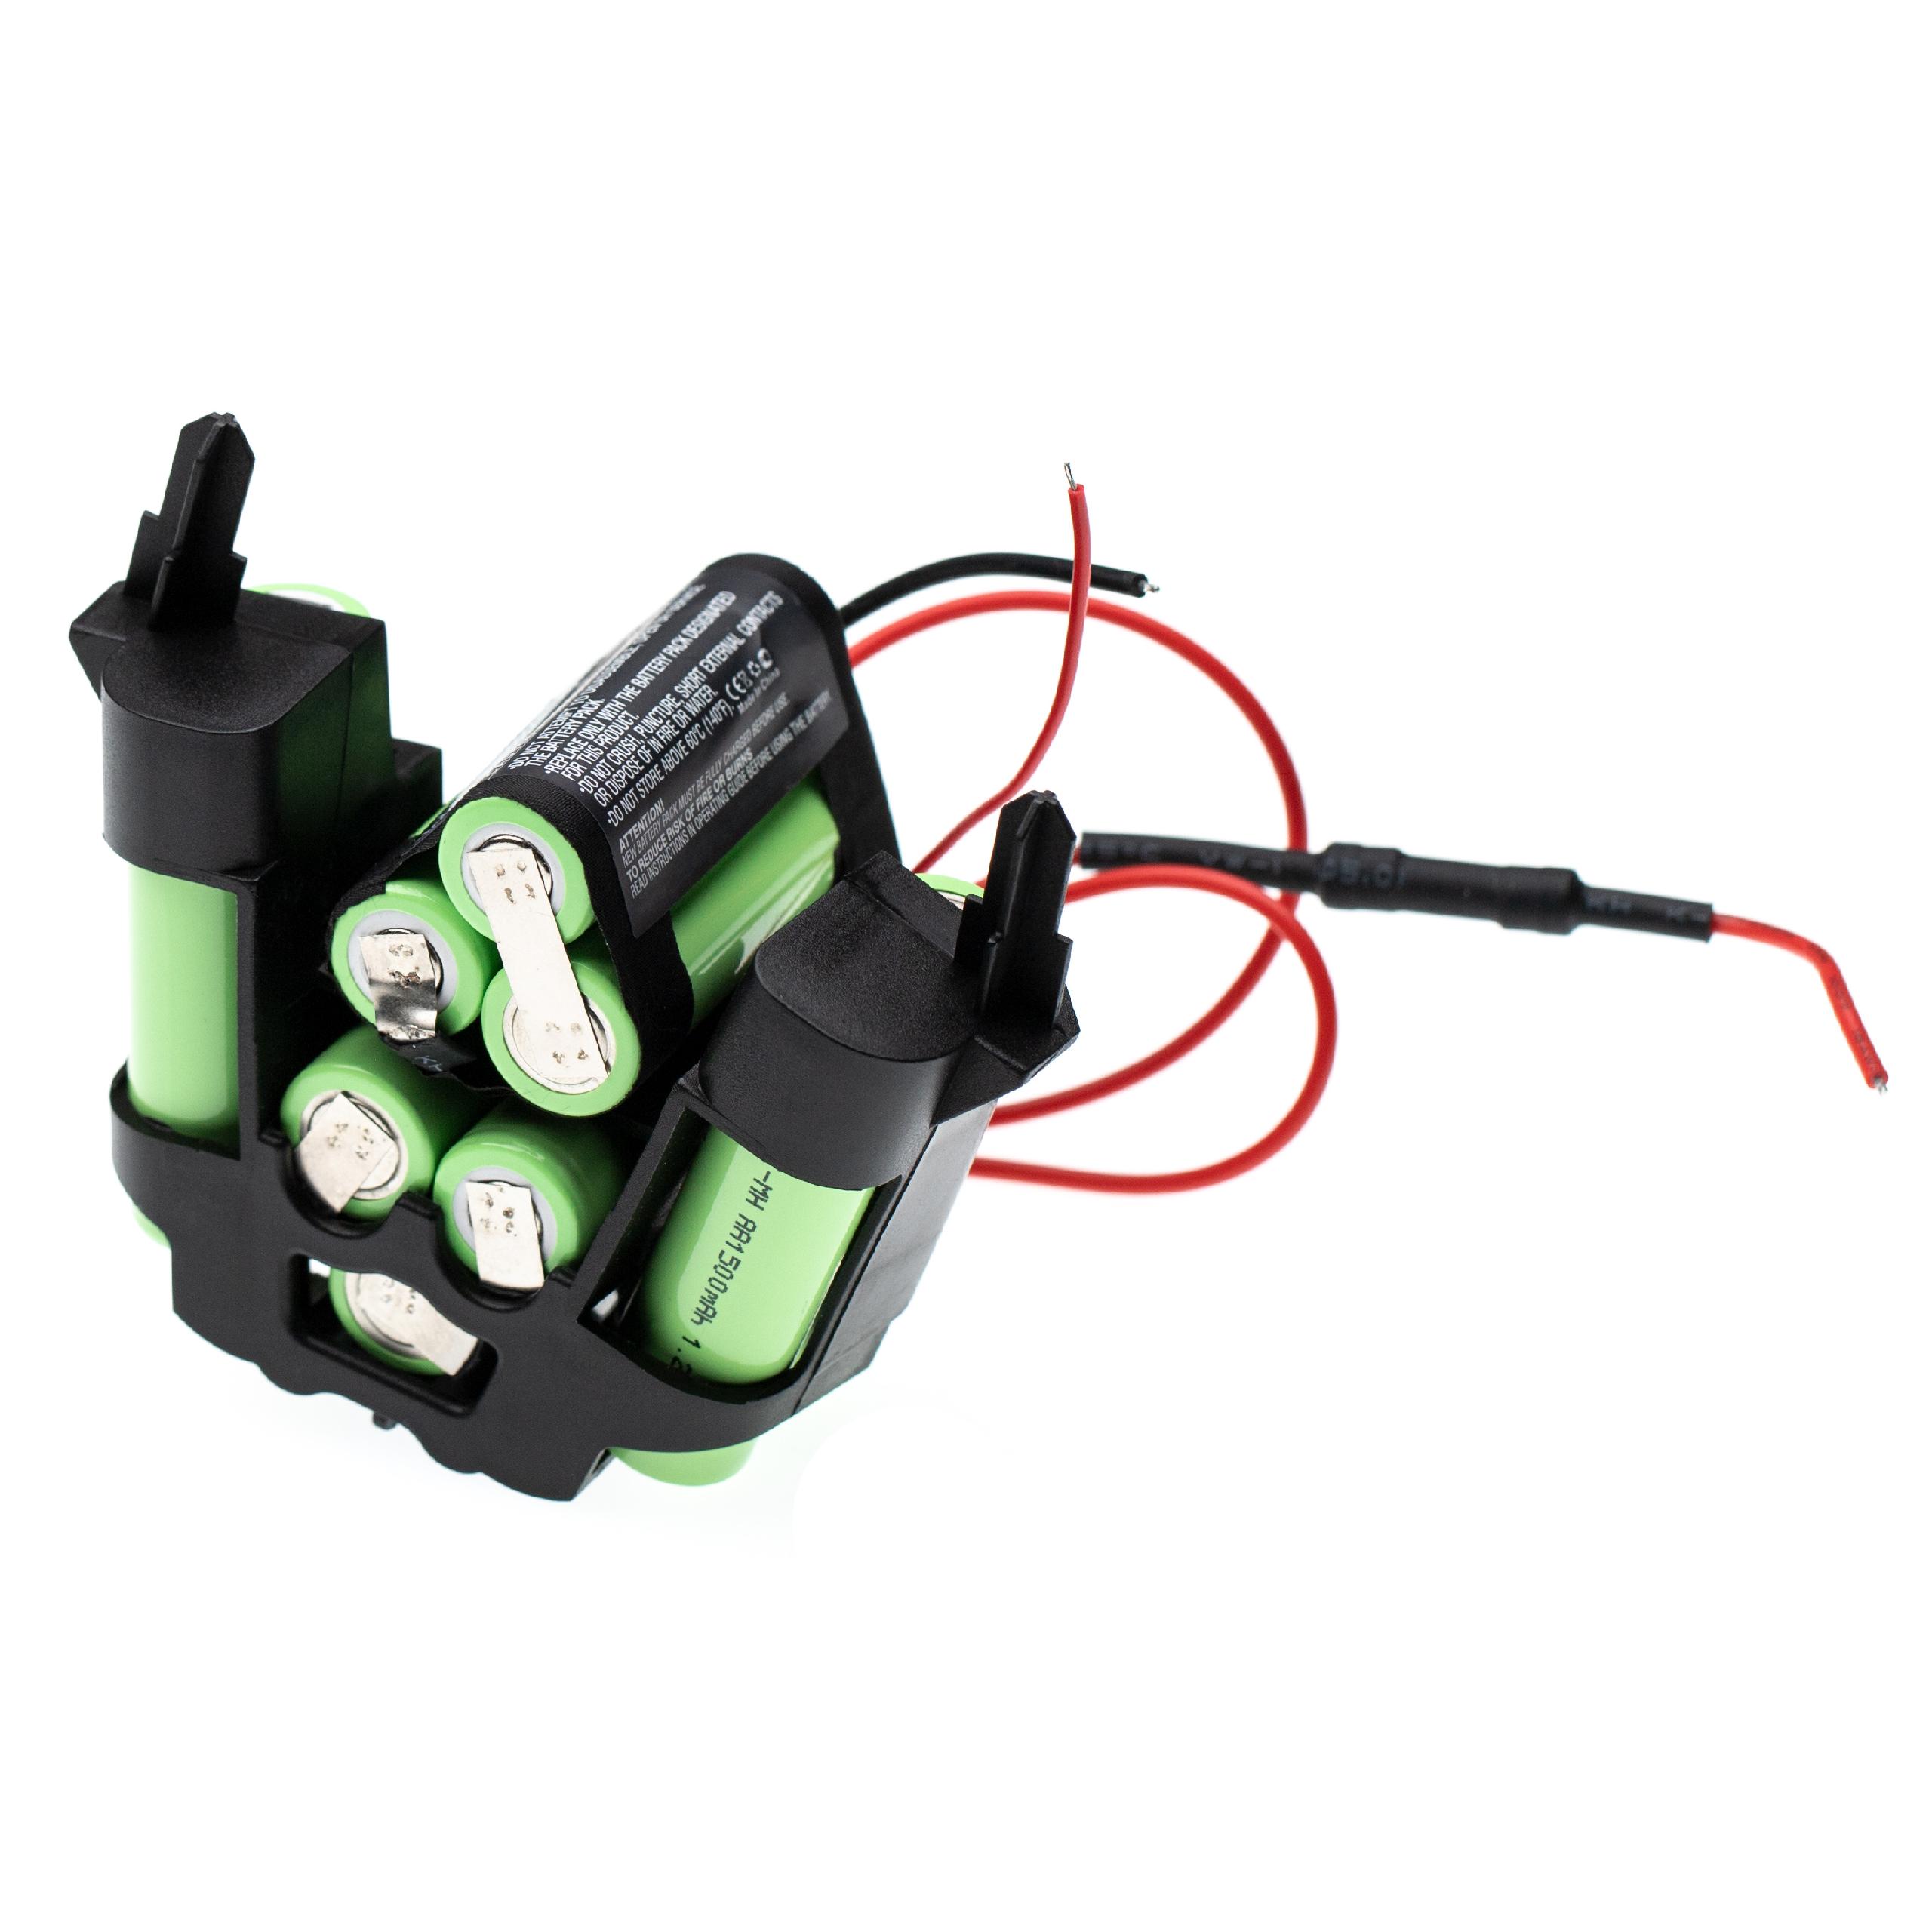 Akumulator do odkurzacza zamiennik AEG 2199035011 - 1500 mAh 12 V NiMH